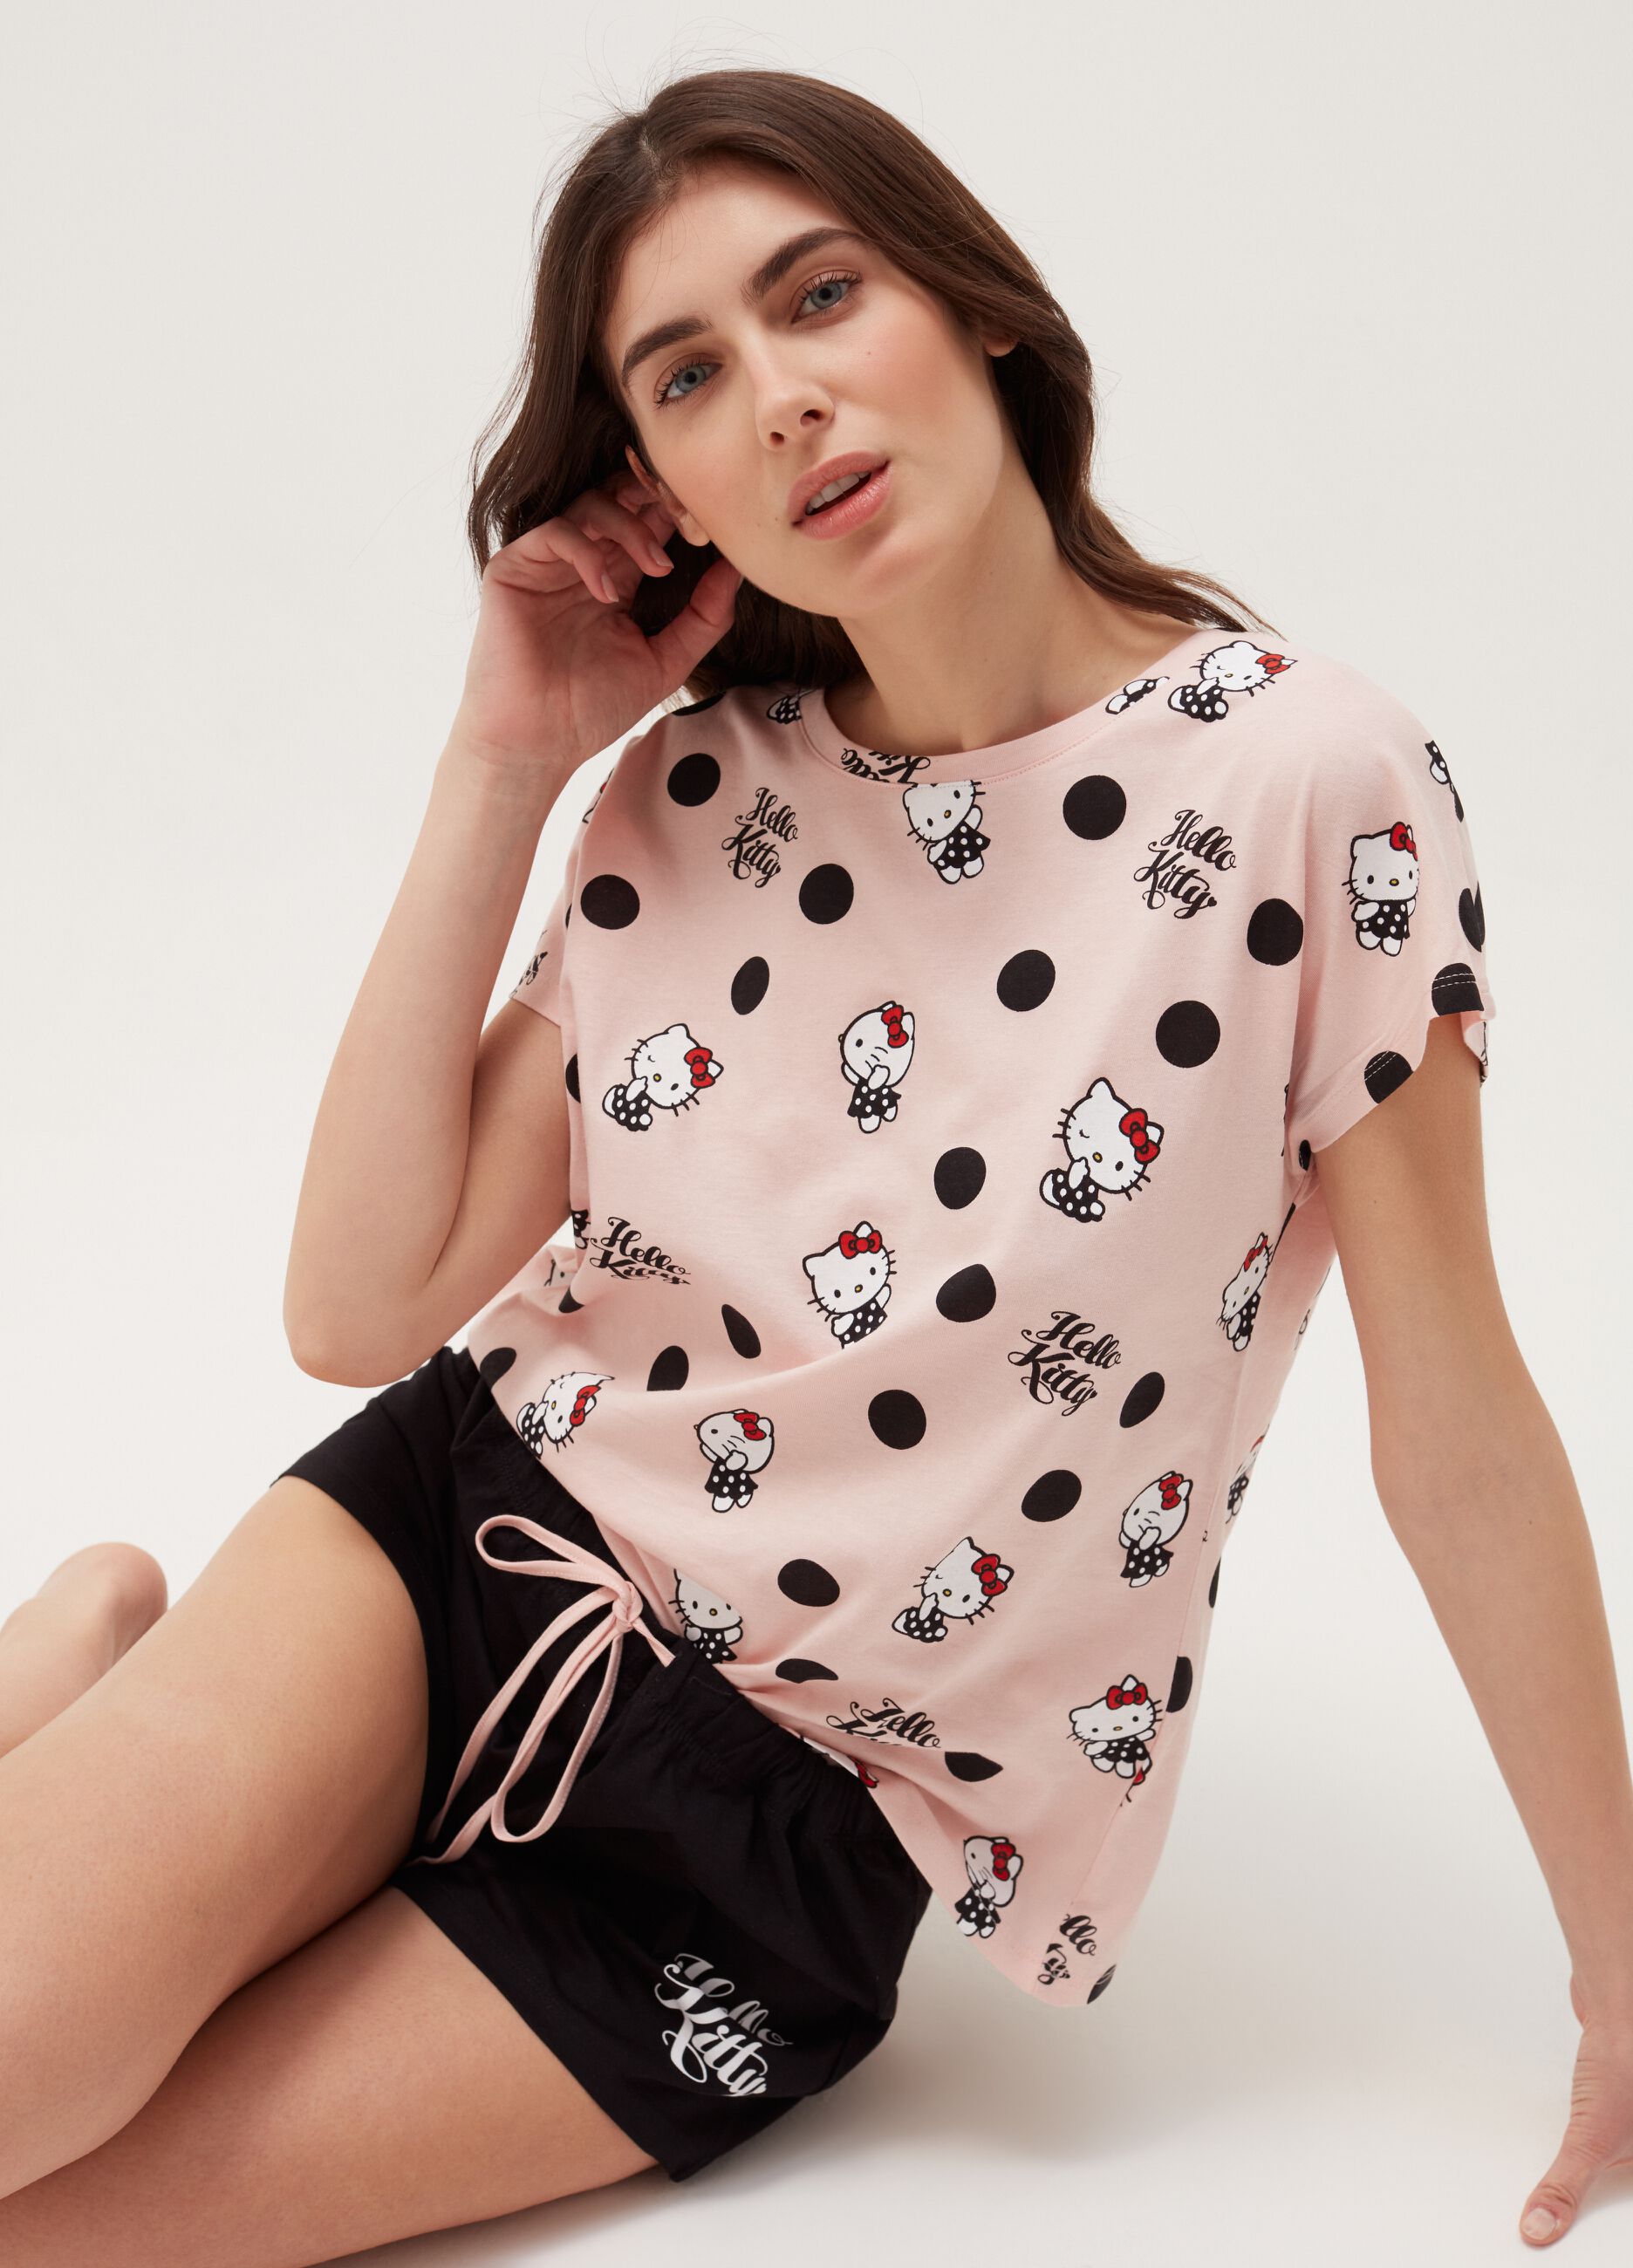 Polka dot cotton pyjamas with Hello Kitty